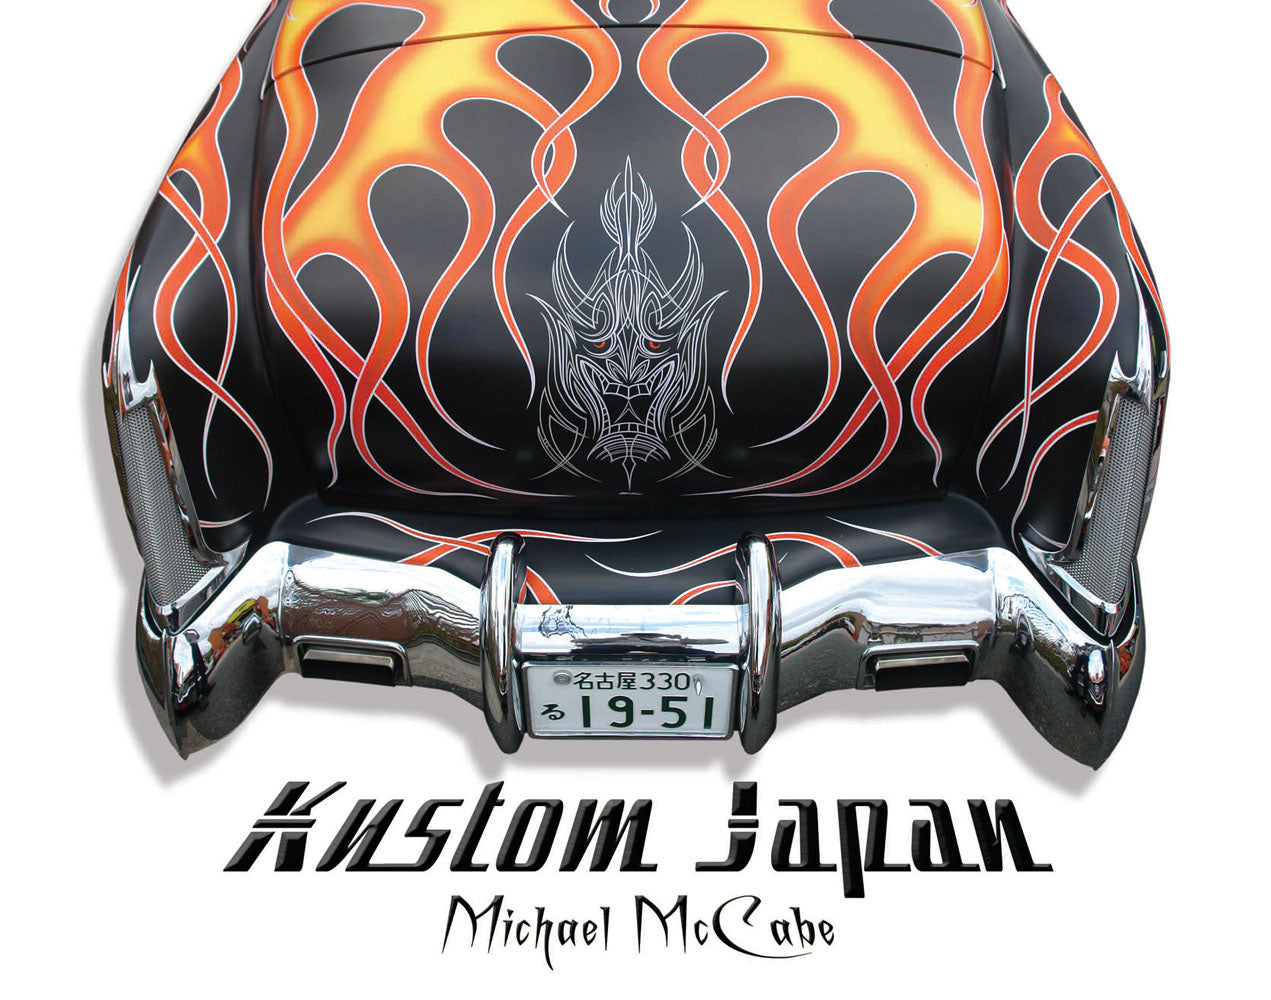 Kustom Japan by Michael McCabe